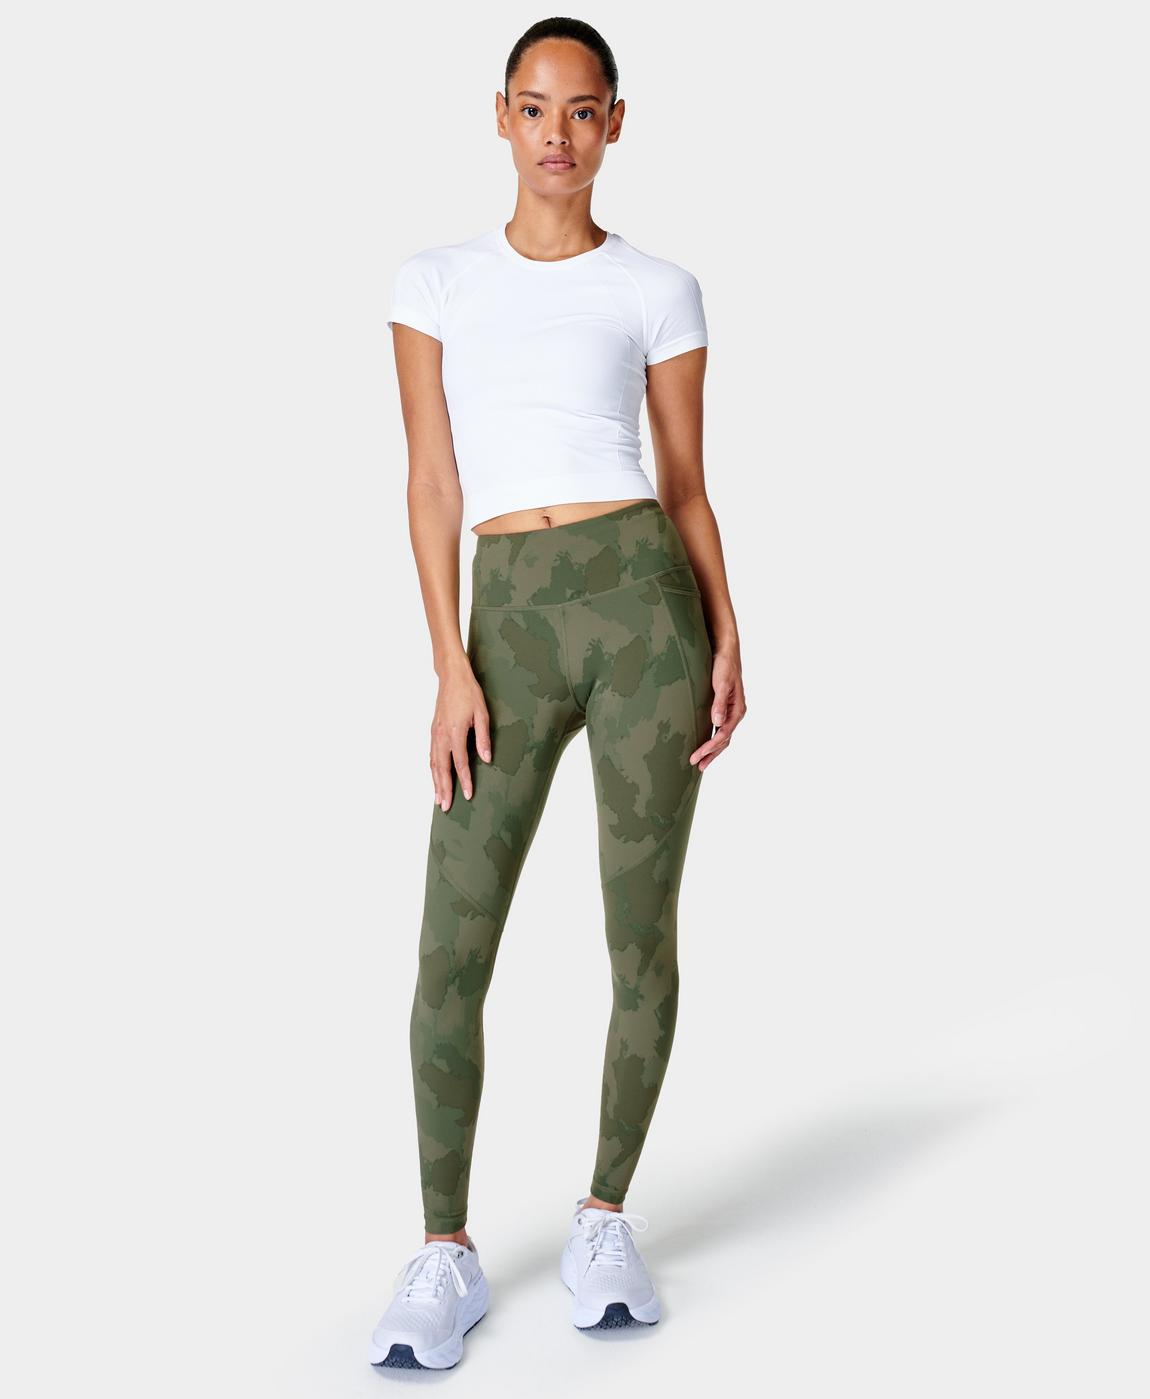 Power Workout Leggings Green Painted Camo Print Women's, 44% OFF